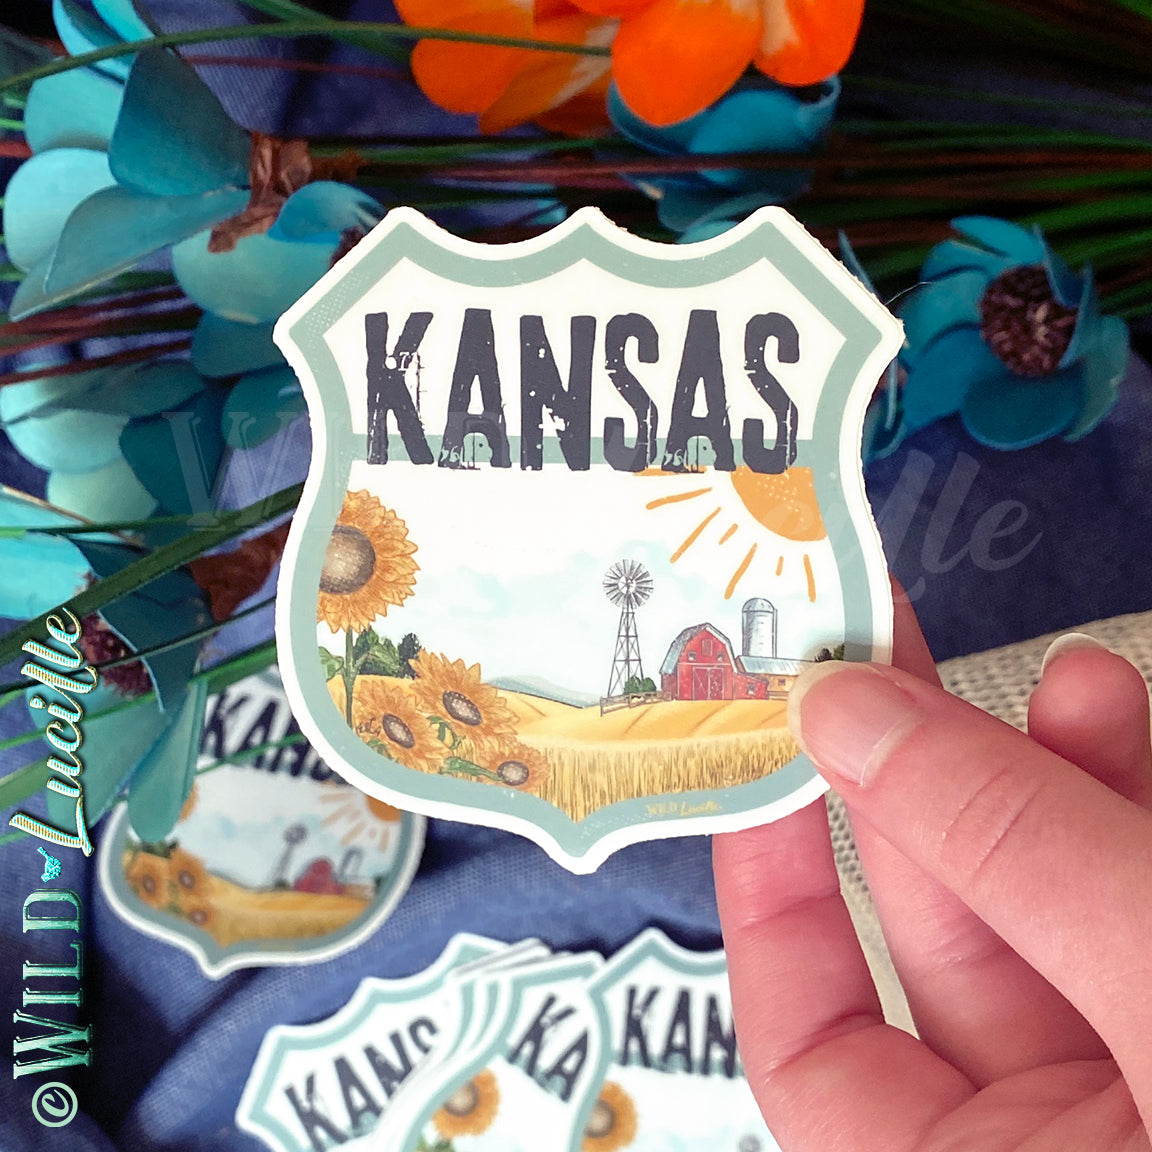 Destination Kansas - Vinyl Souvenir Sticker Decals